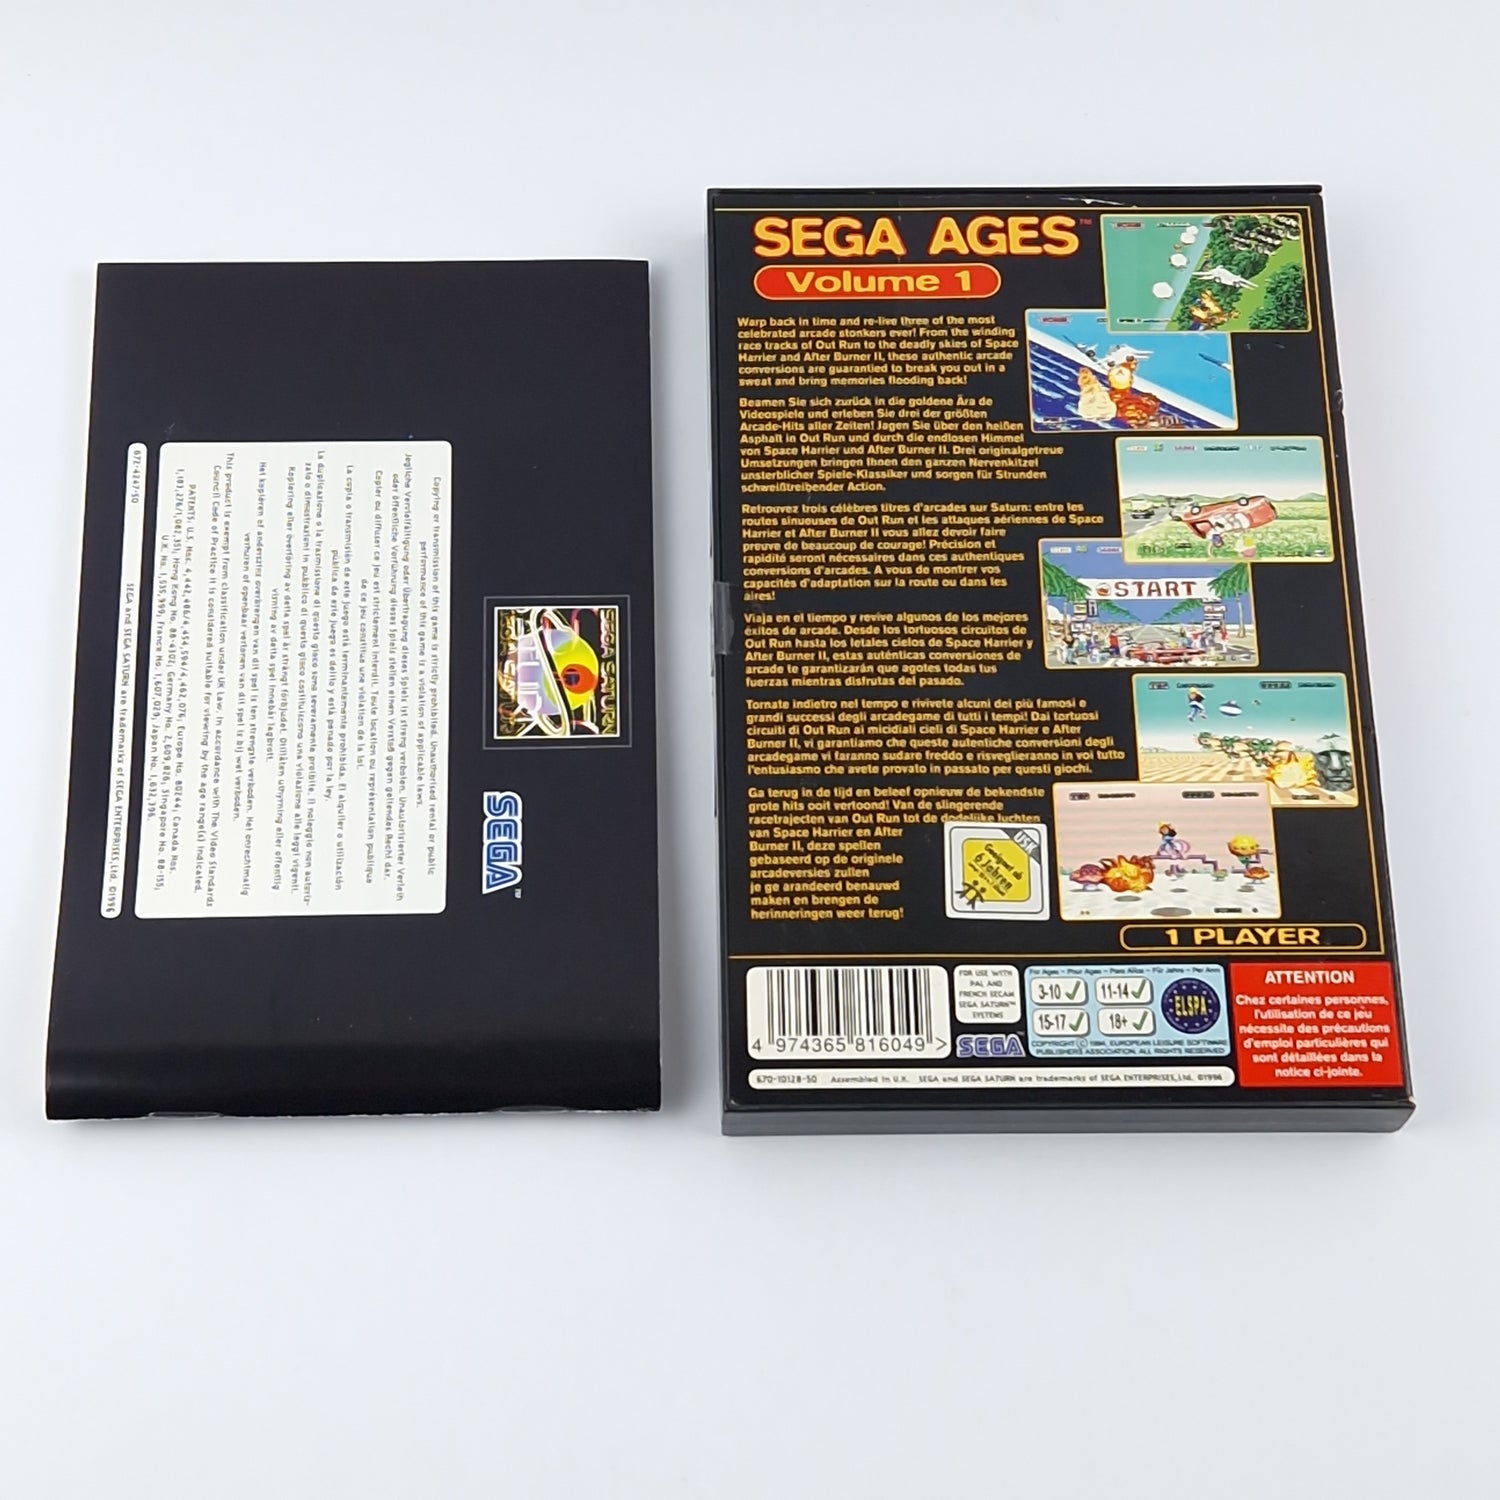 Sega Saturn Spiel : Sega Ages Volume 1 - OVP Anleitung CD PAL Disc Game